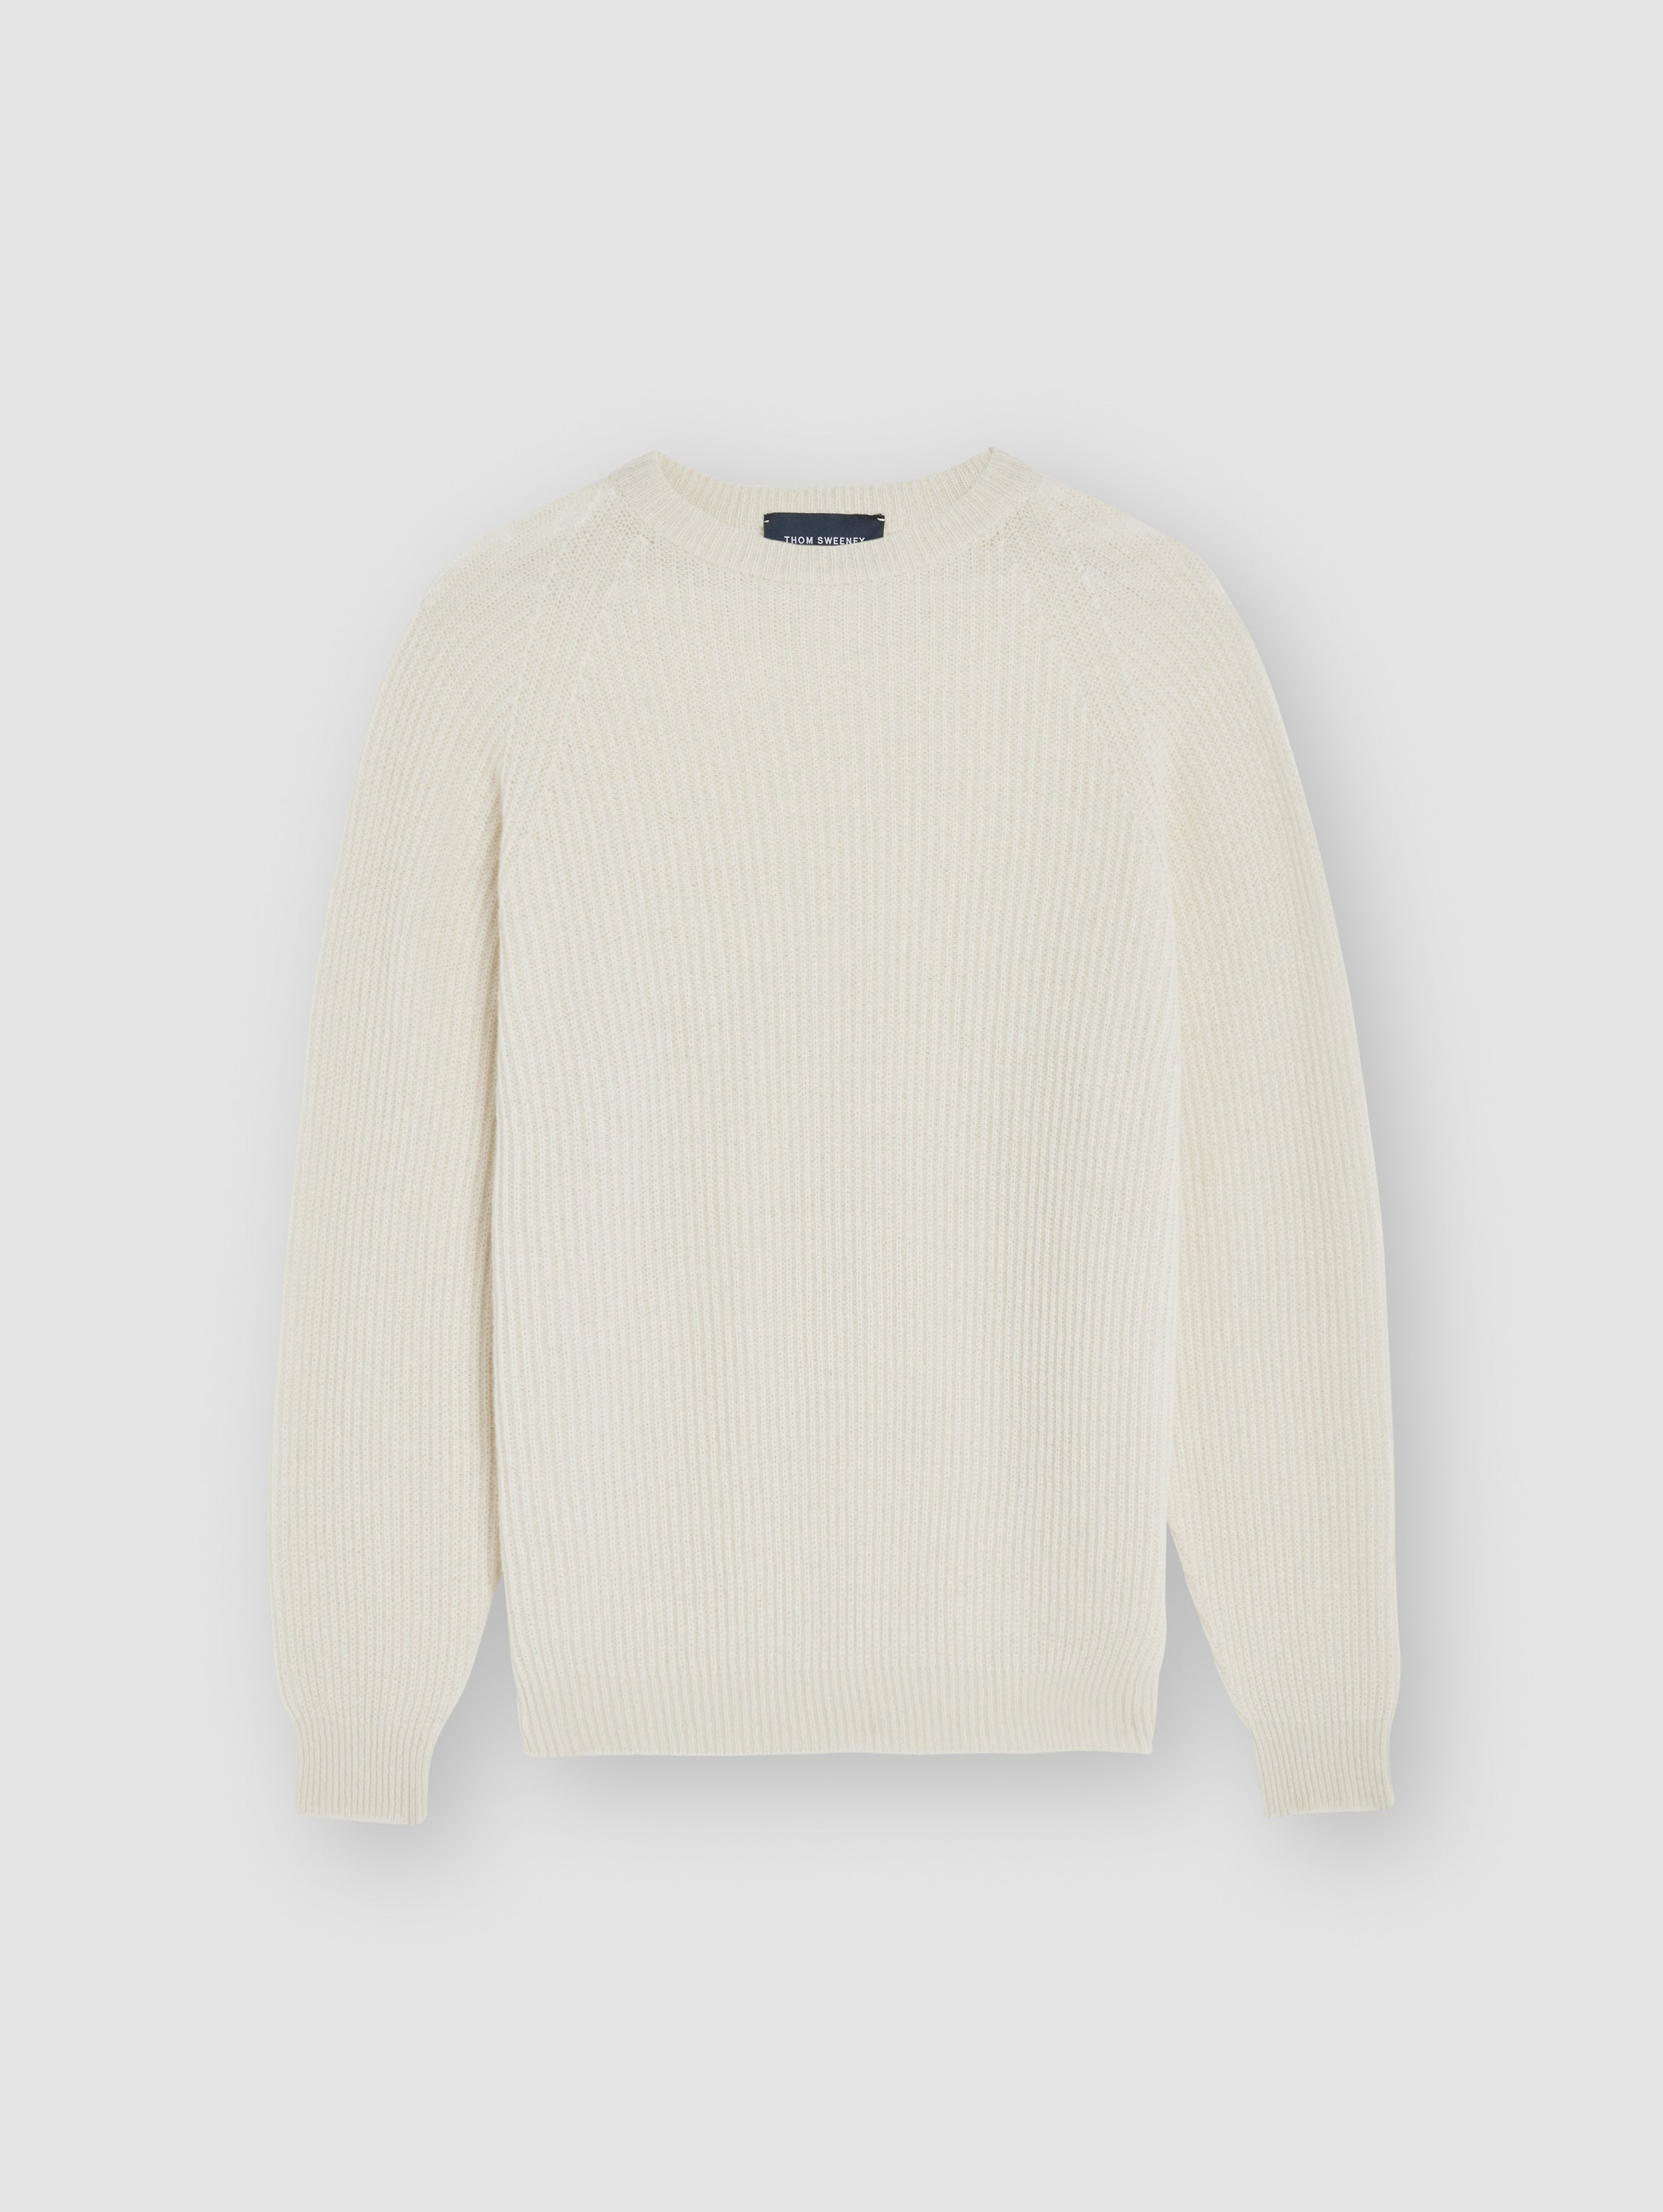 Cashmere Fisherman Rib Sweater Off-White Product Image